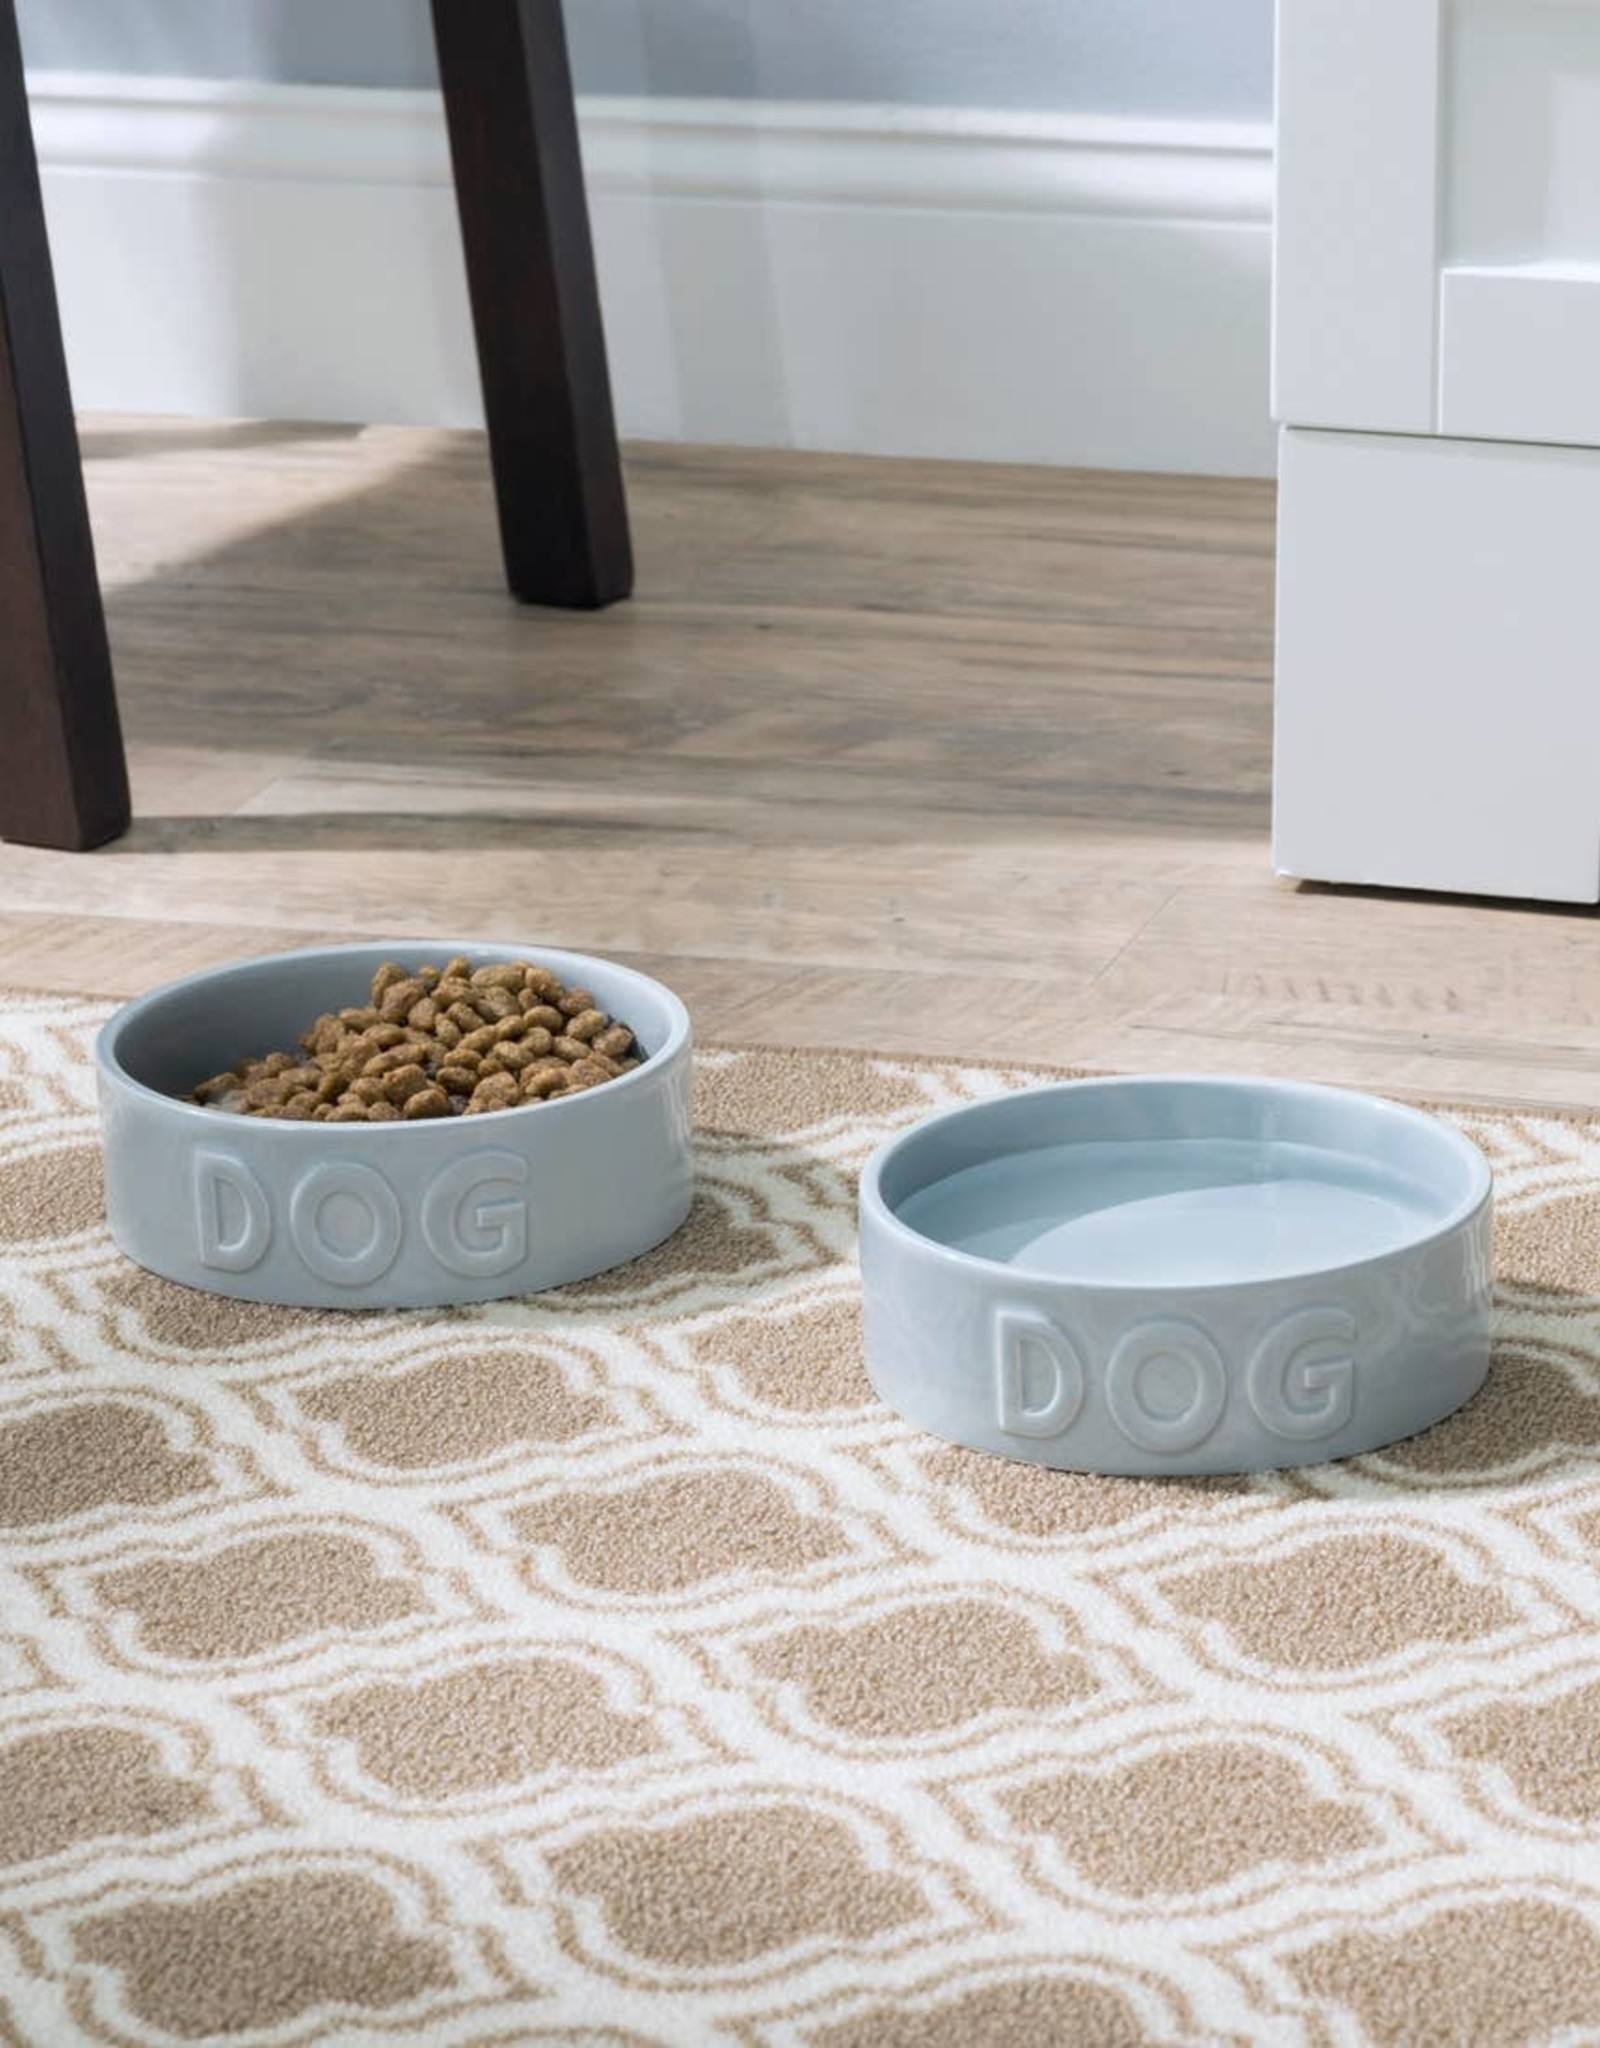 Park Life Designs Classic Dog Grey Pet Bowl